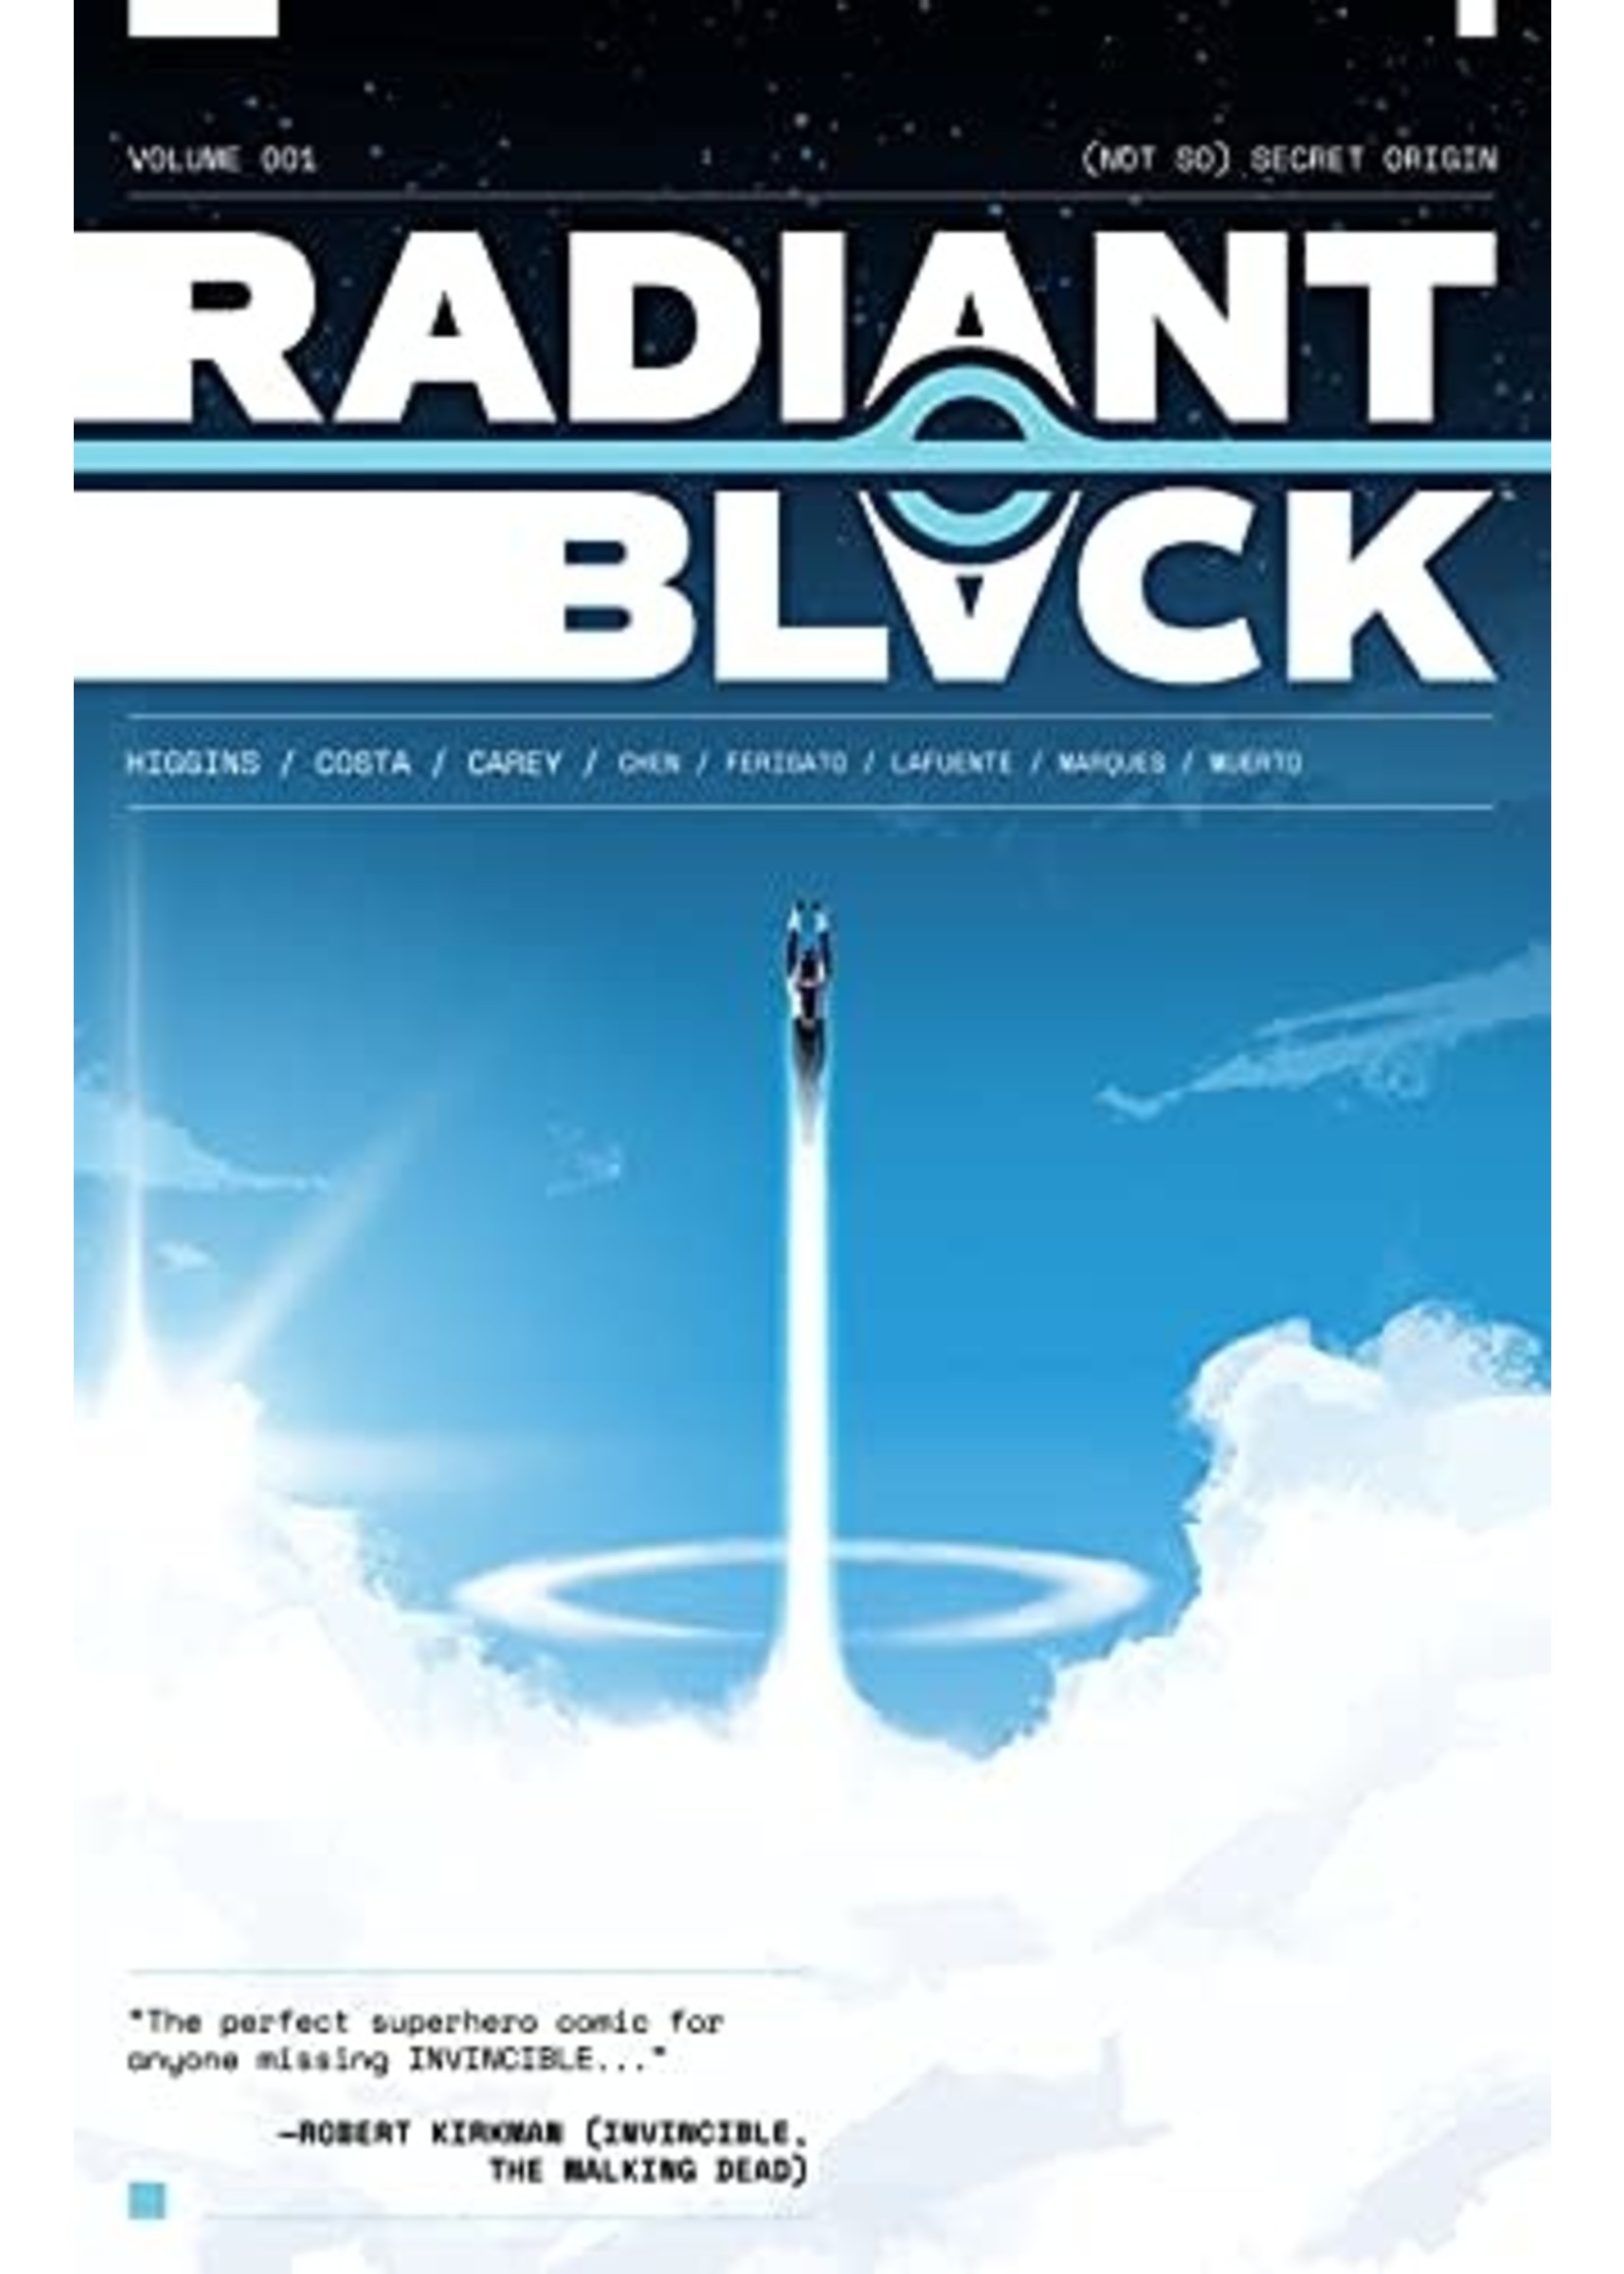 Radiant Black Vol 01: (Not So) Secret Origin